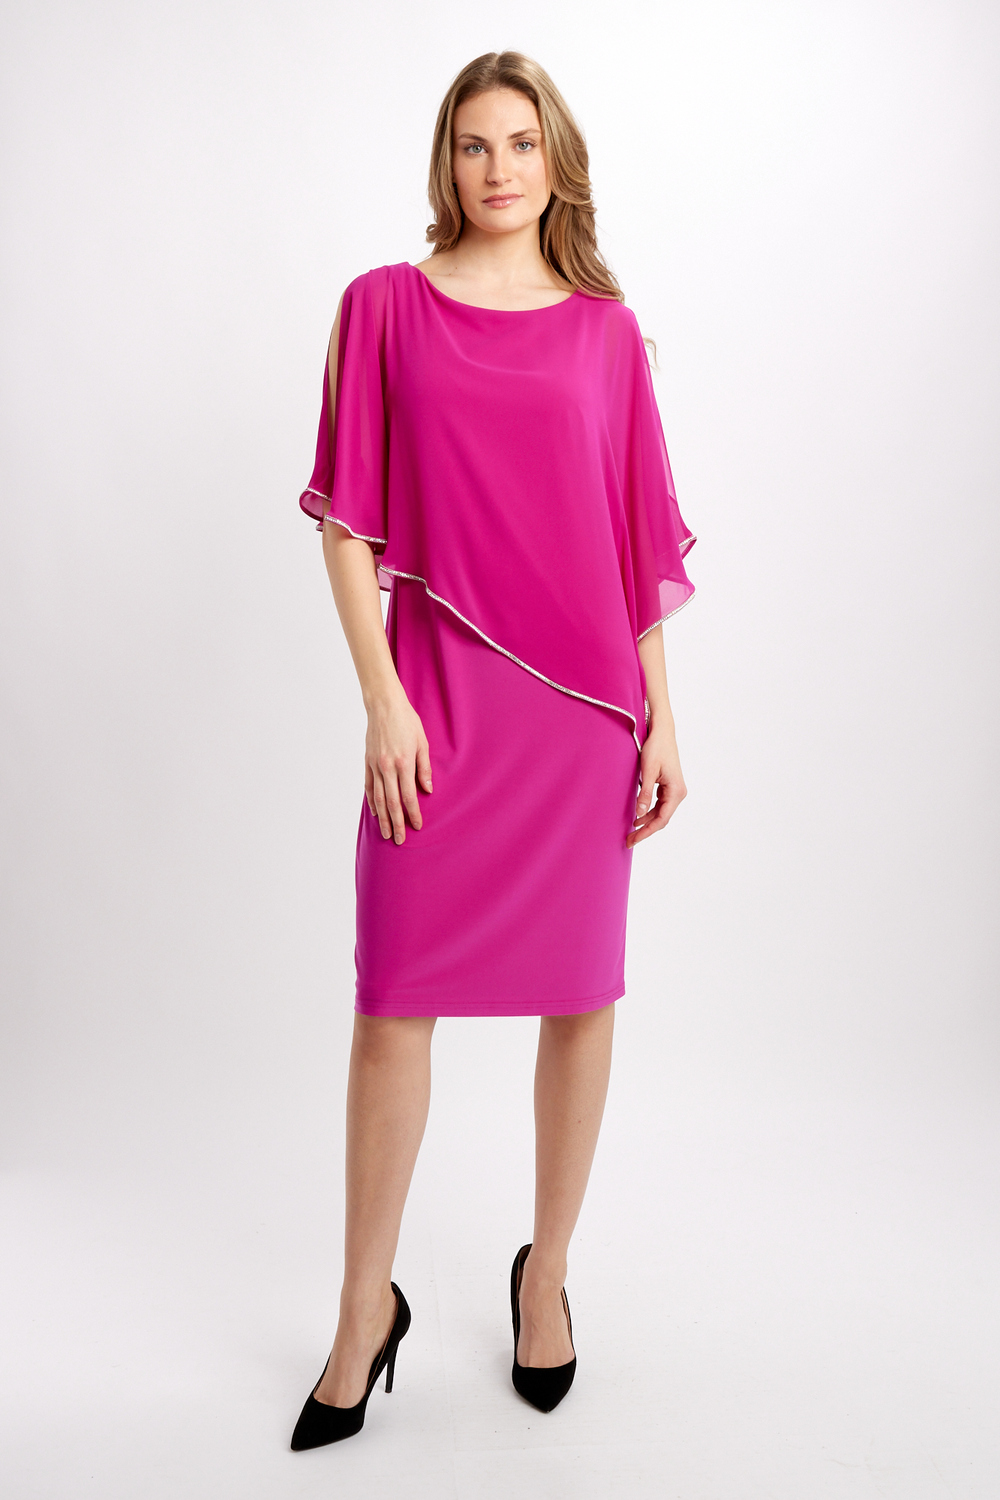 Dress with Asymmetric Hem Style 223762. Opulence